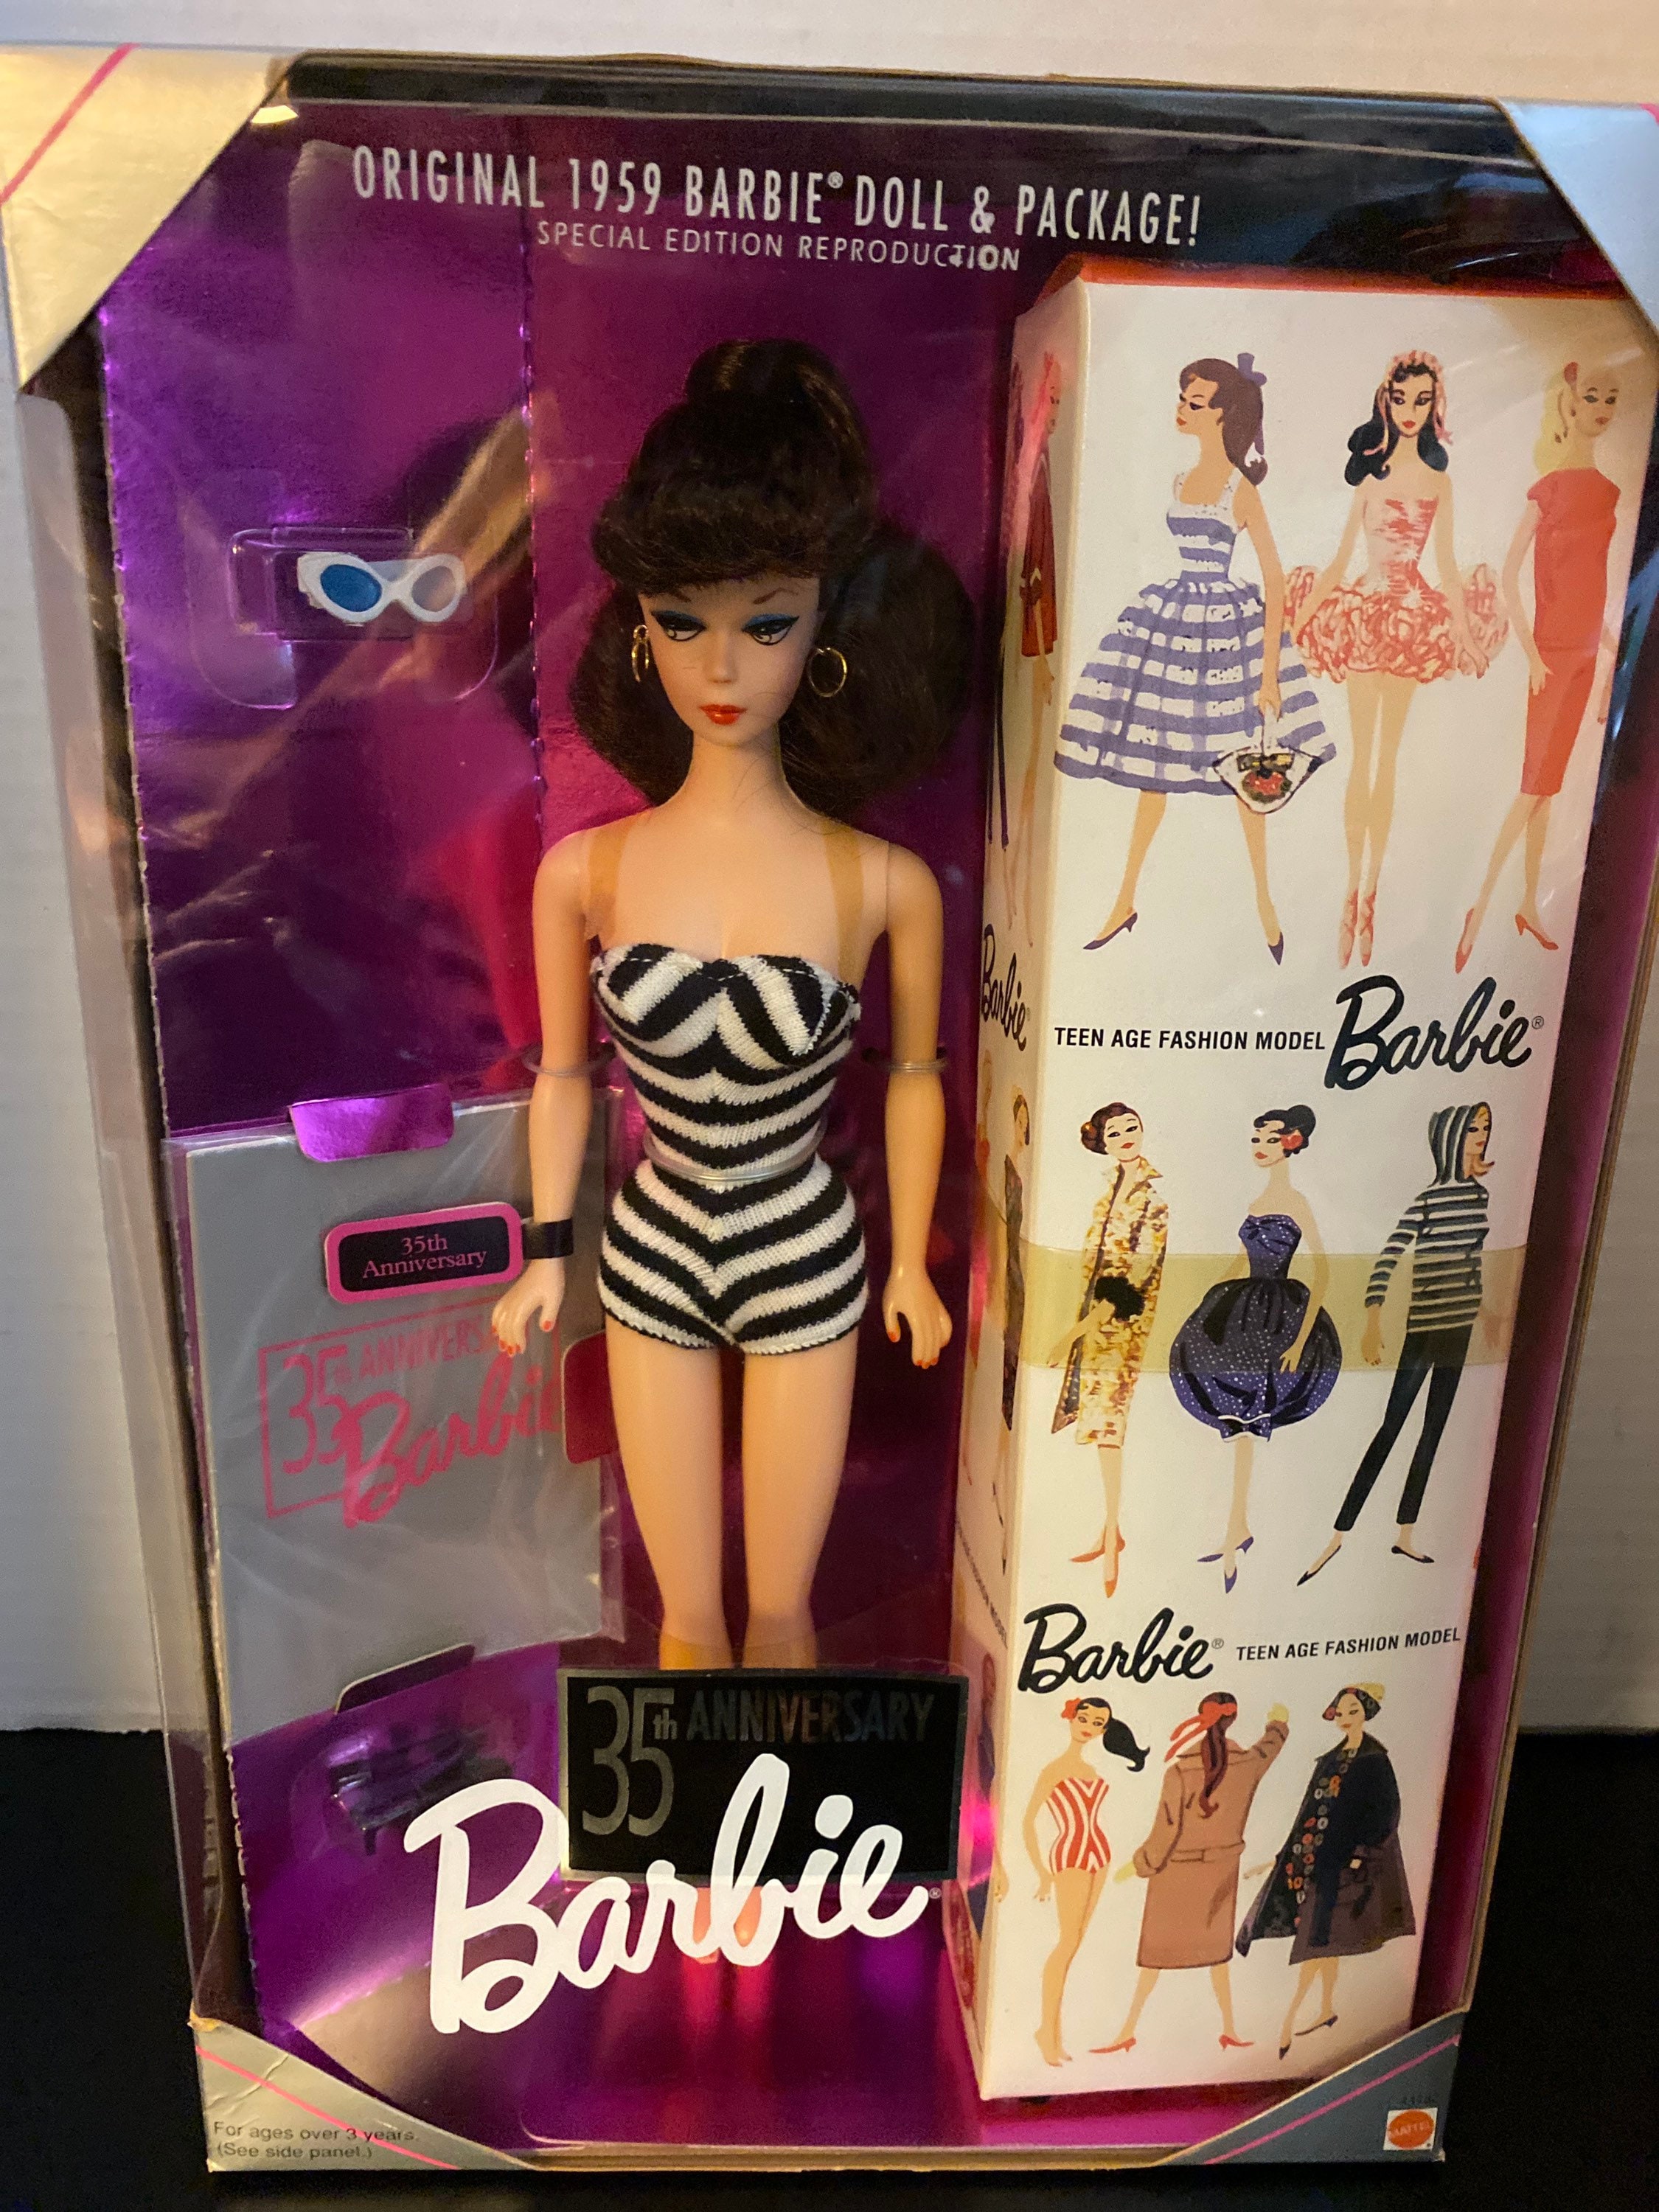 belegd broodje Aardappelen Overtollig 35th Anniversary Barbie Original 1959 Barbie Doll & Package - Etsy Finland